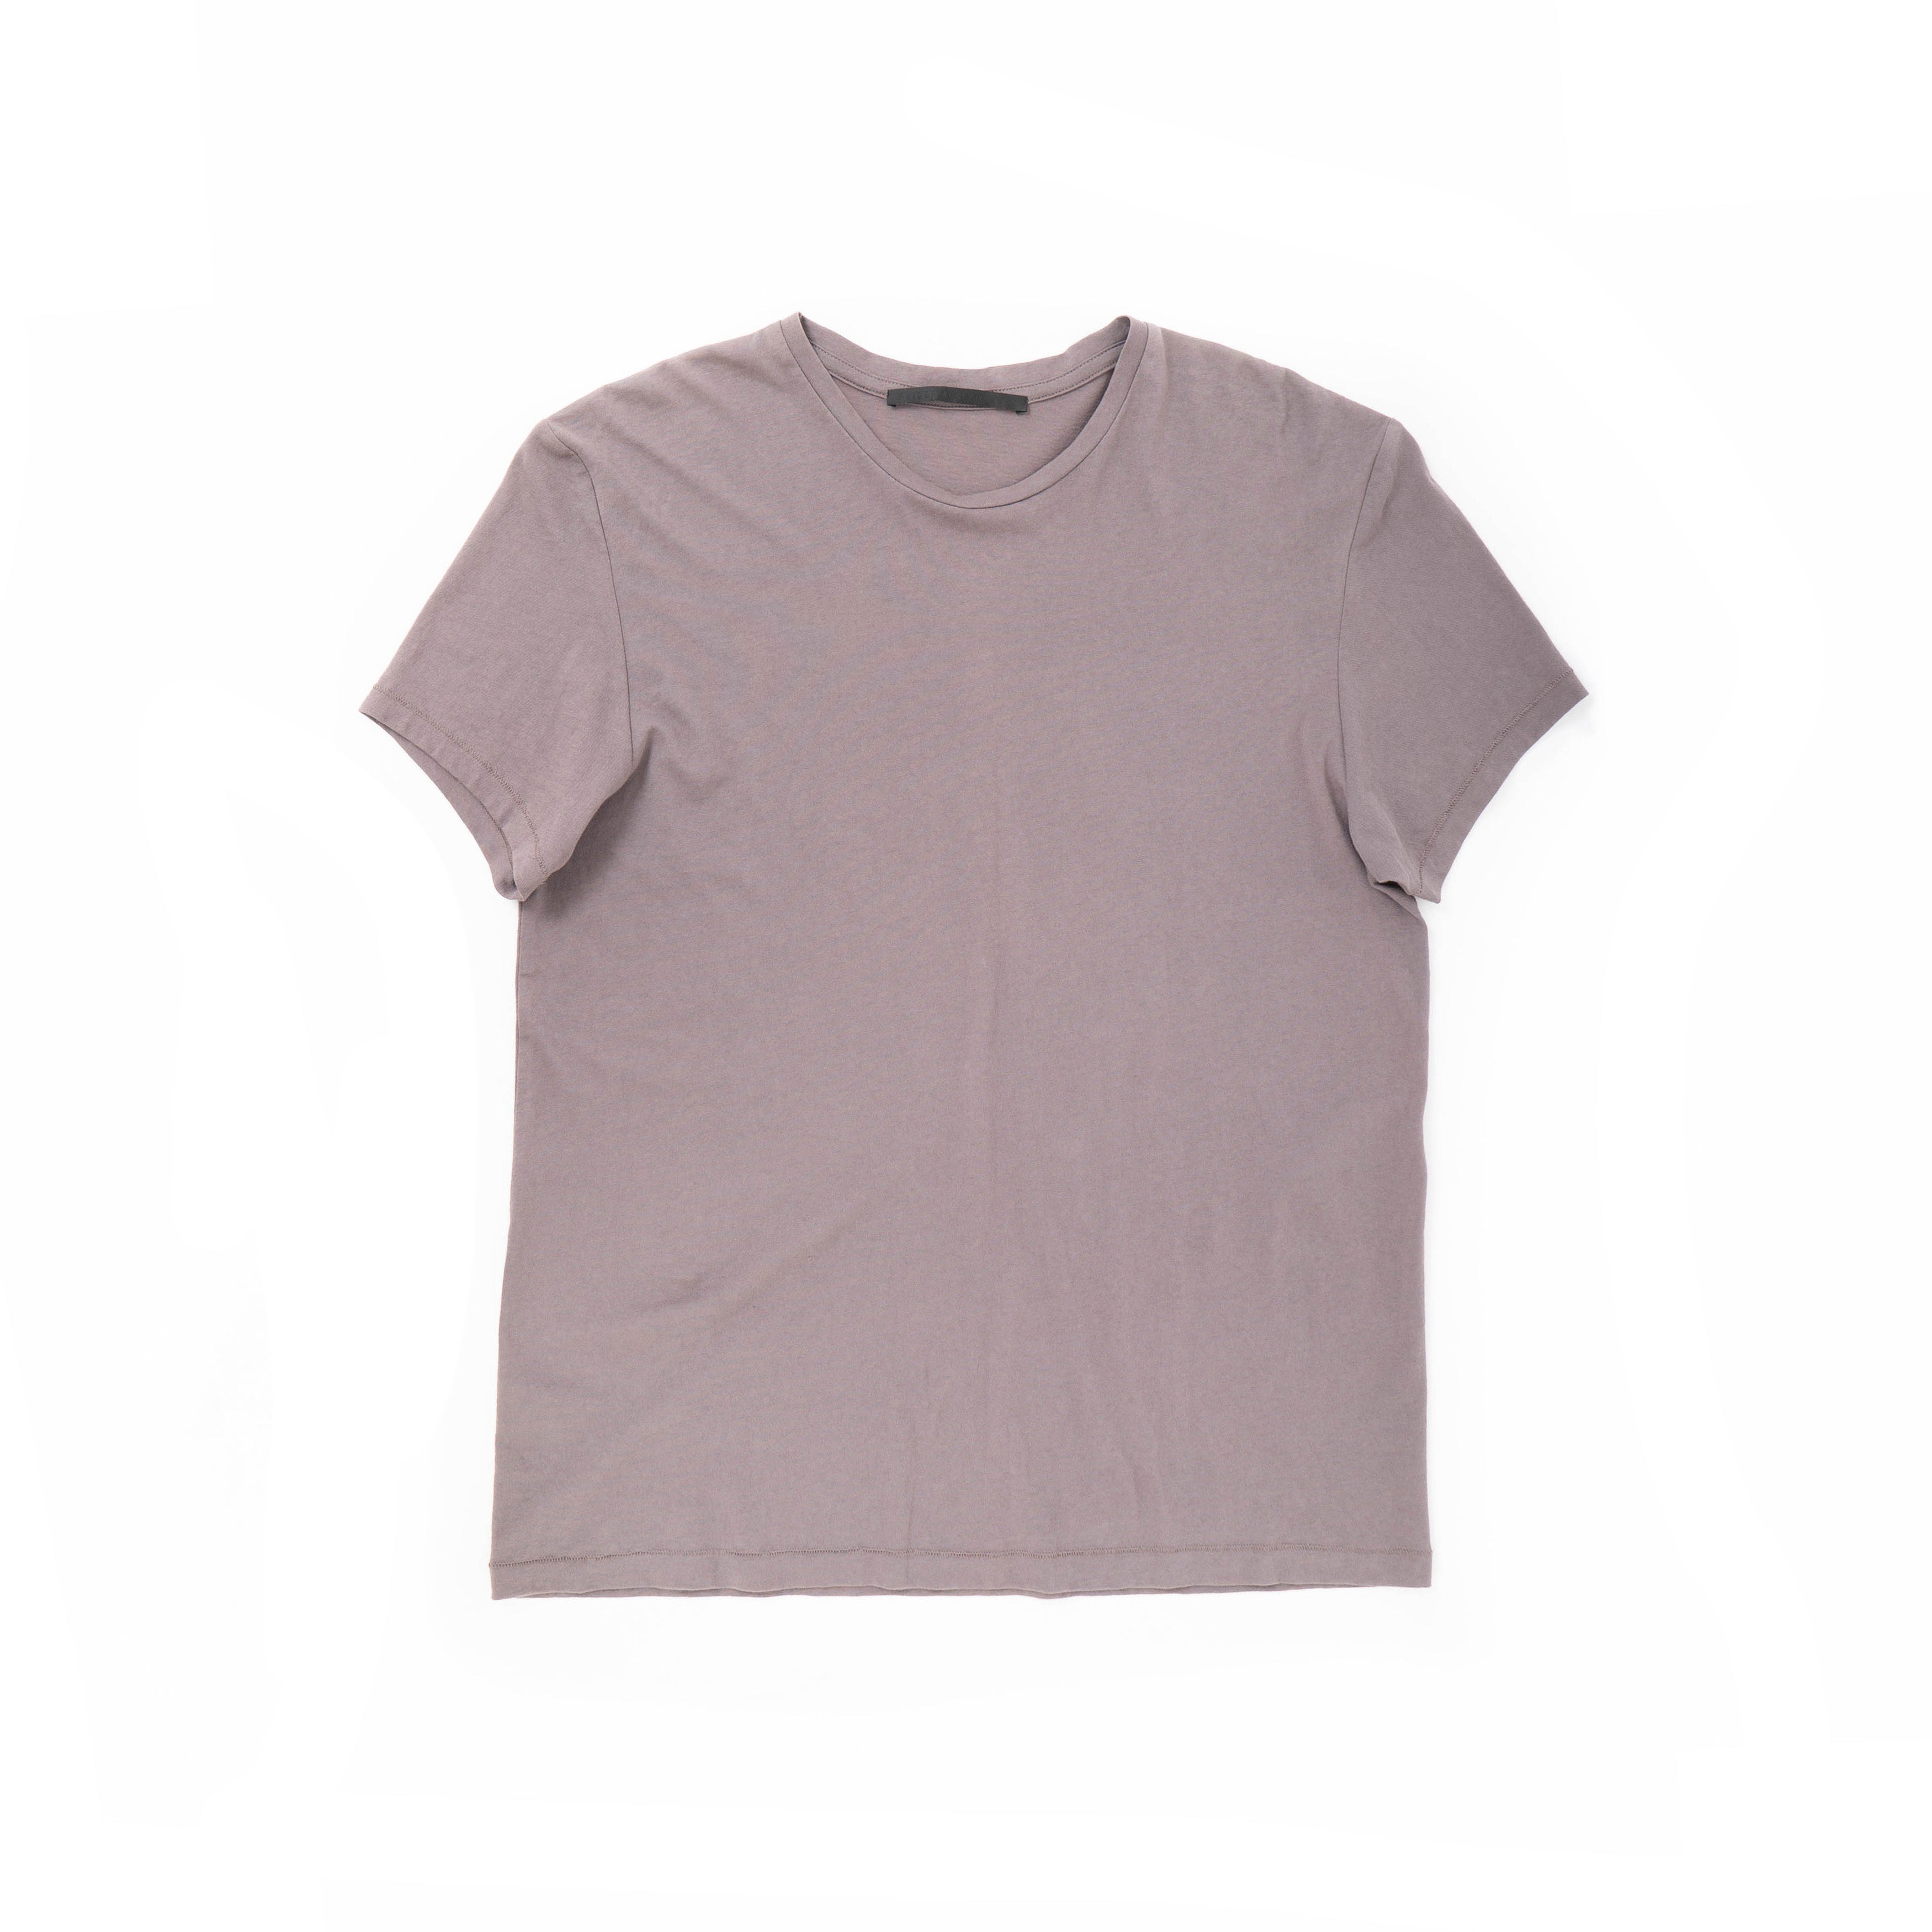 SS16 Light Purple Cotton T-Shirt